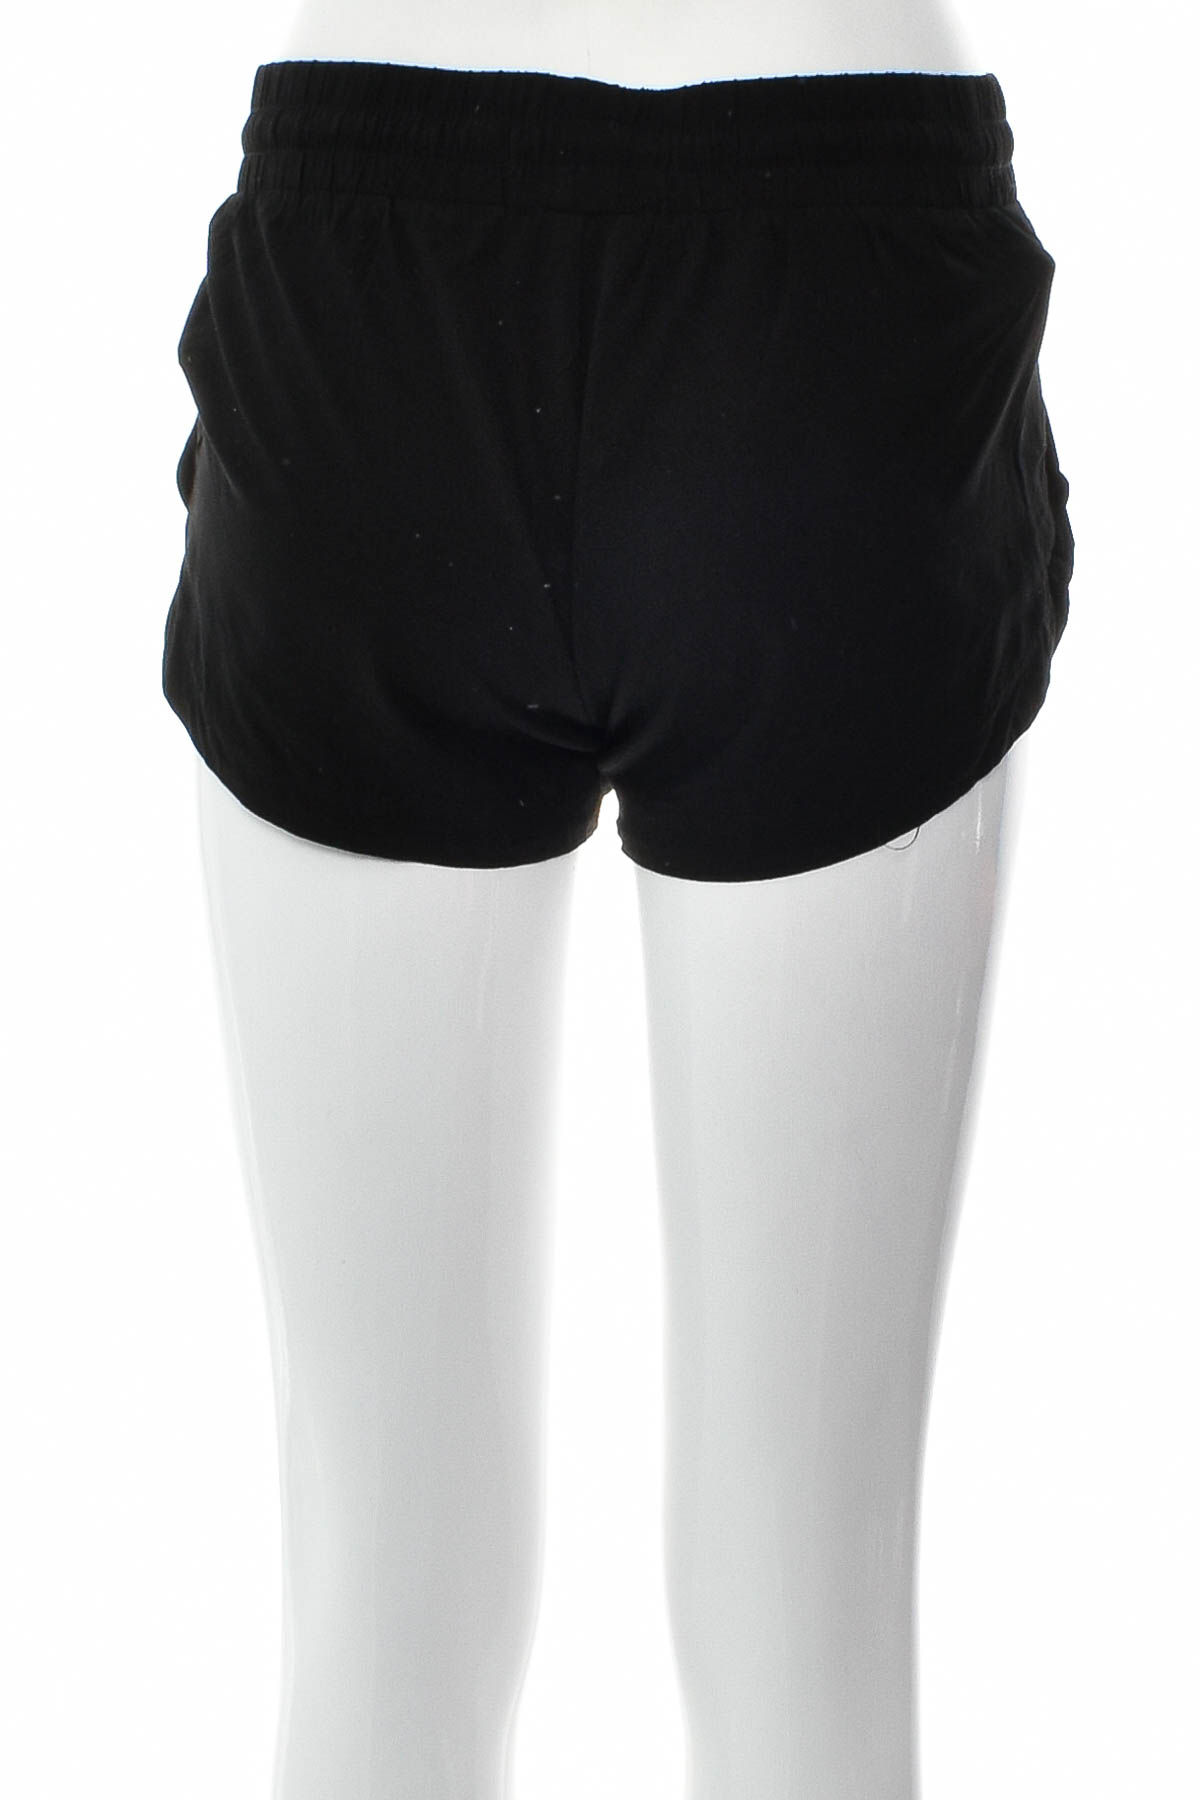 Female shorts - Tally Weijl - 1